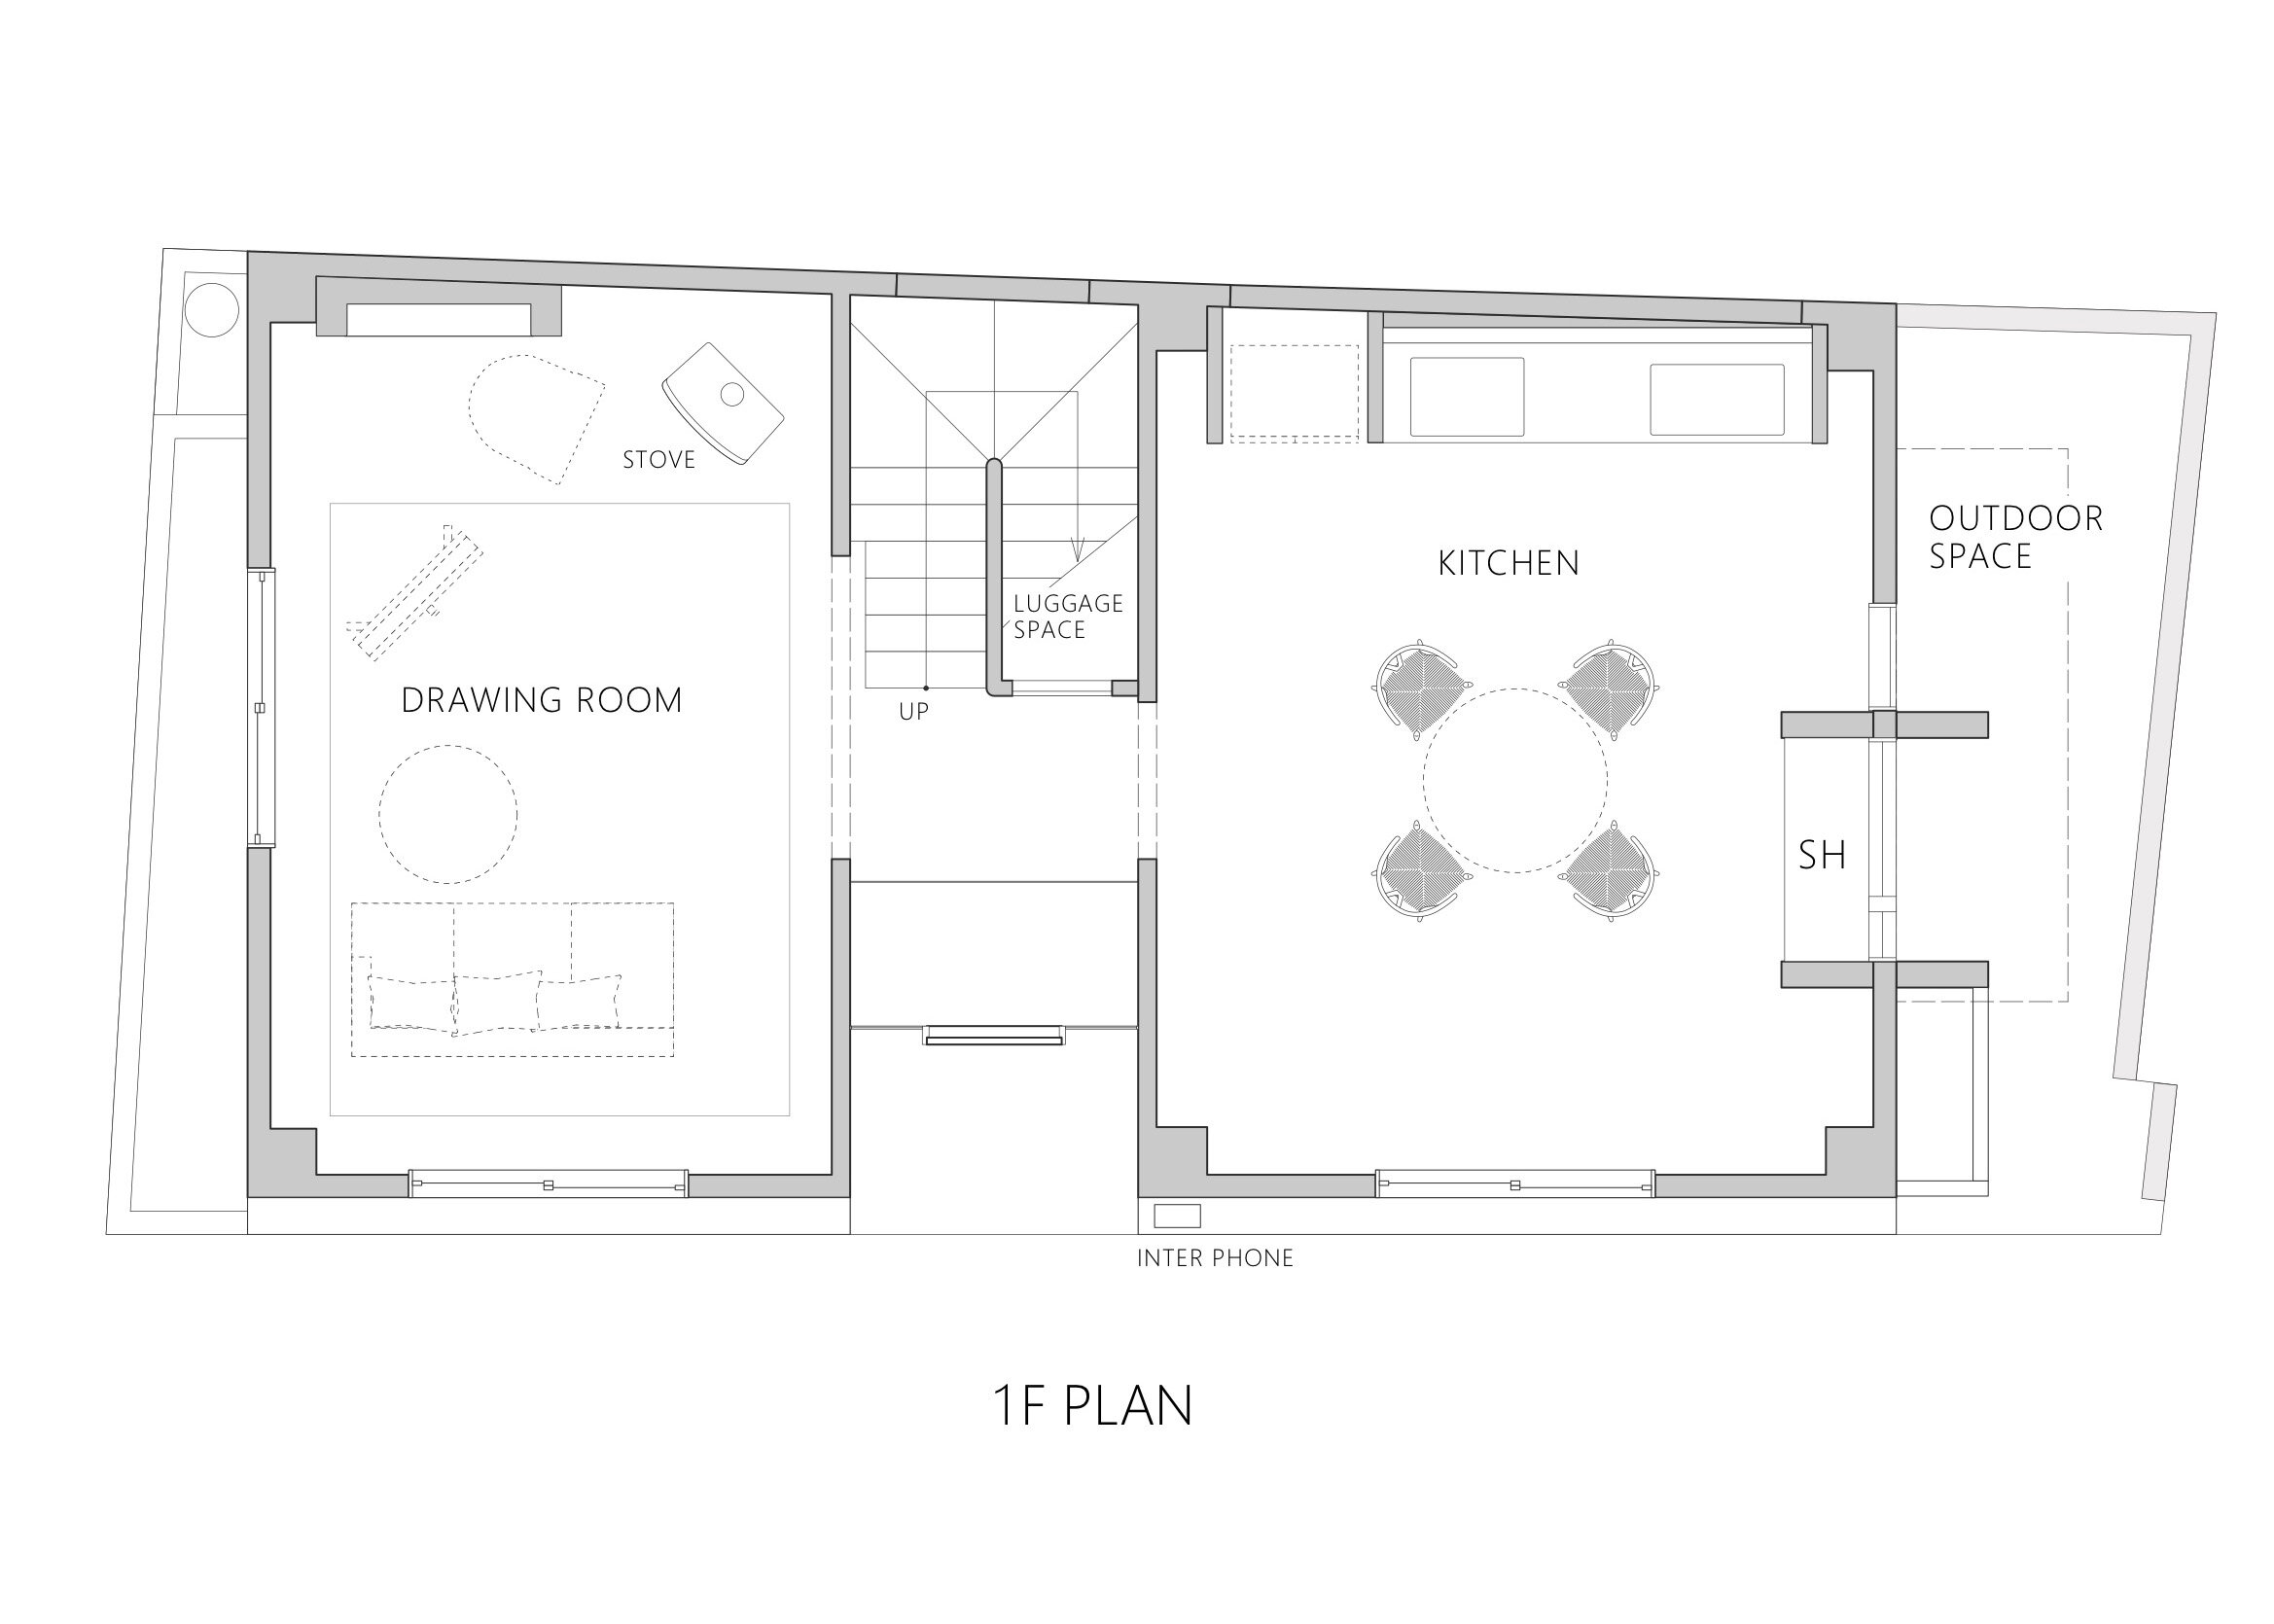  Ground floor plan of ISLAND LIVING designed by Hiroyuki Ogura/DRAWERS. 